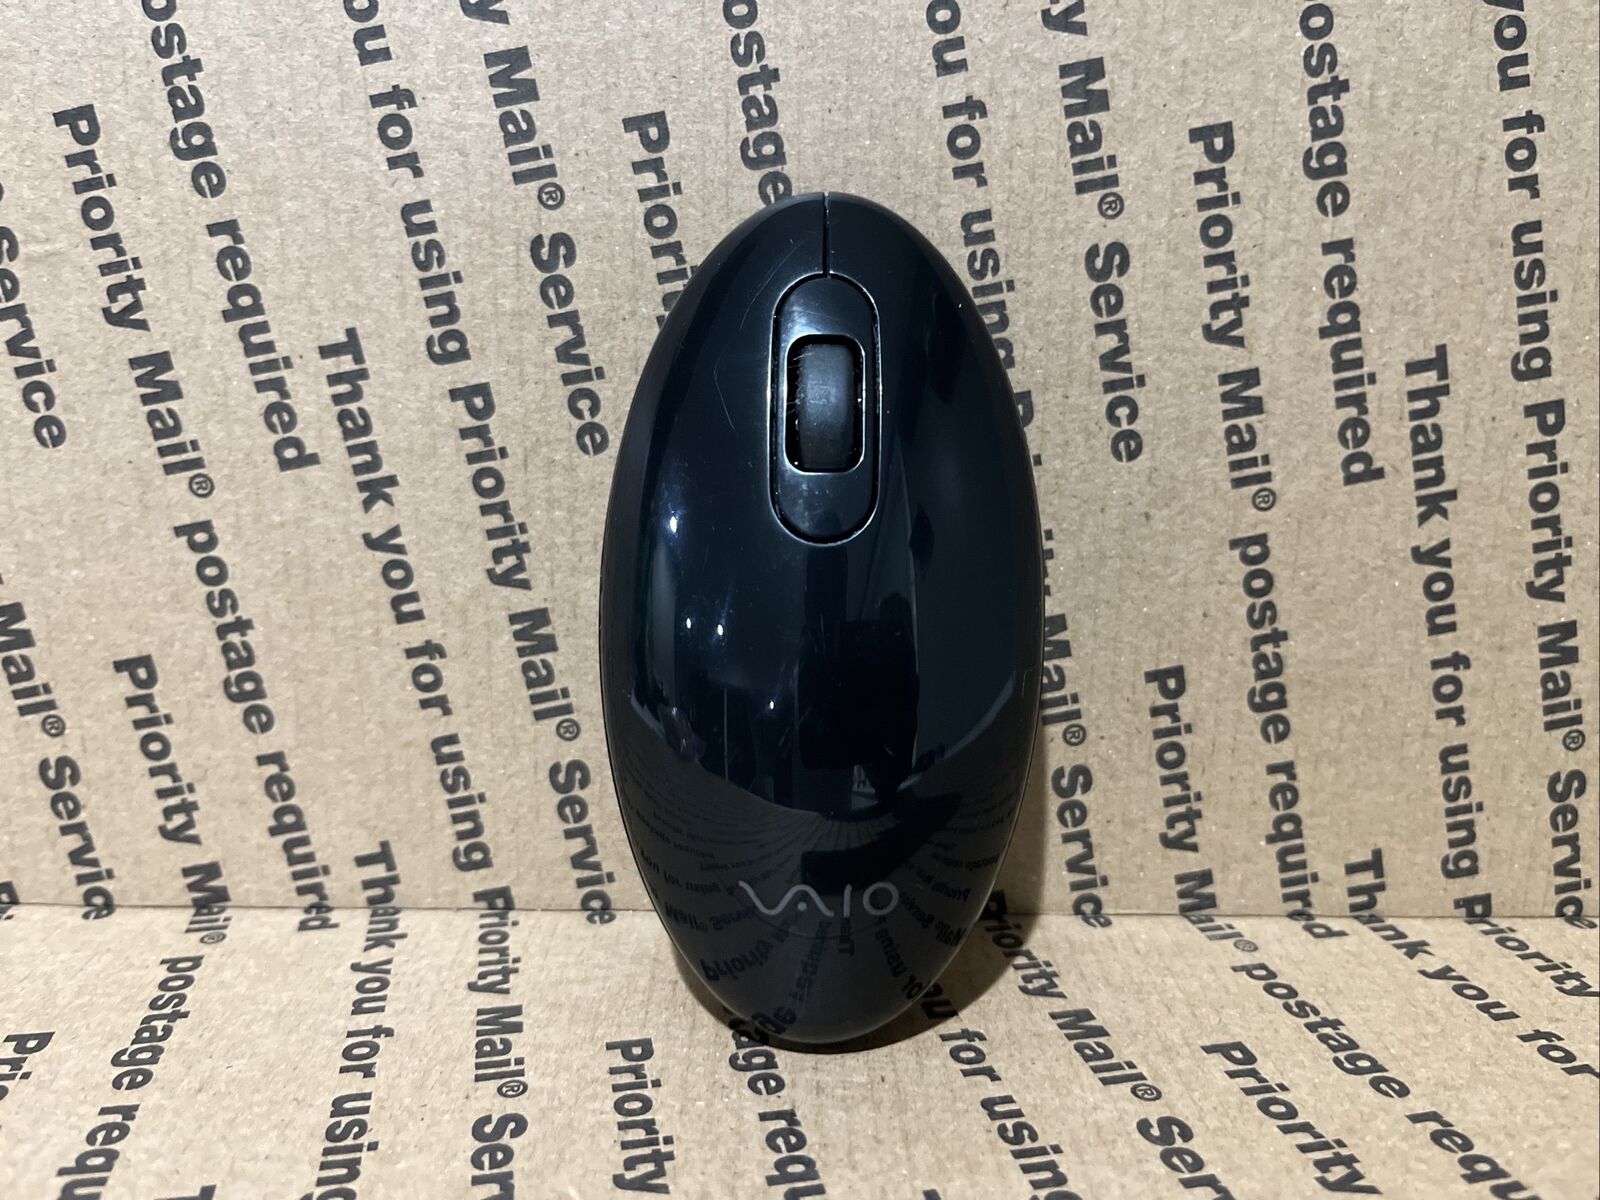 Sony Vaio VGP-WMS30 2.4GHZ Wireless Mouse